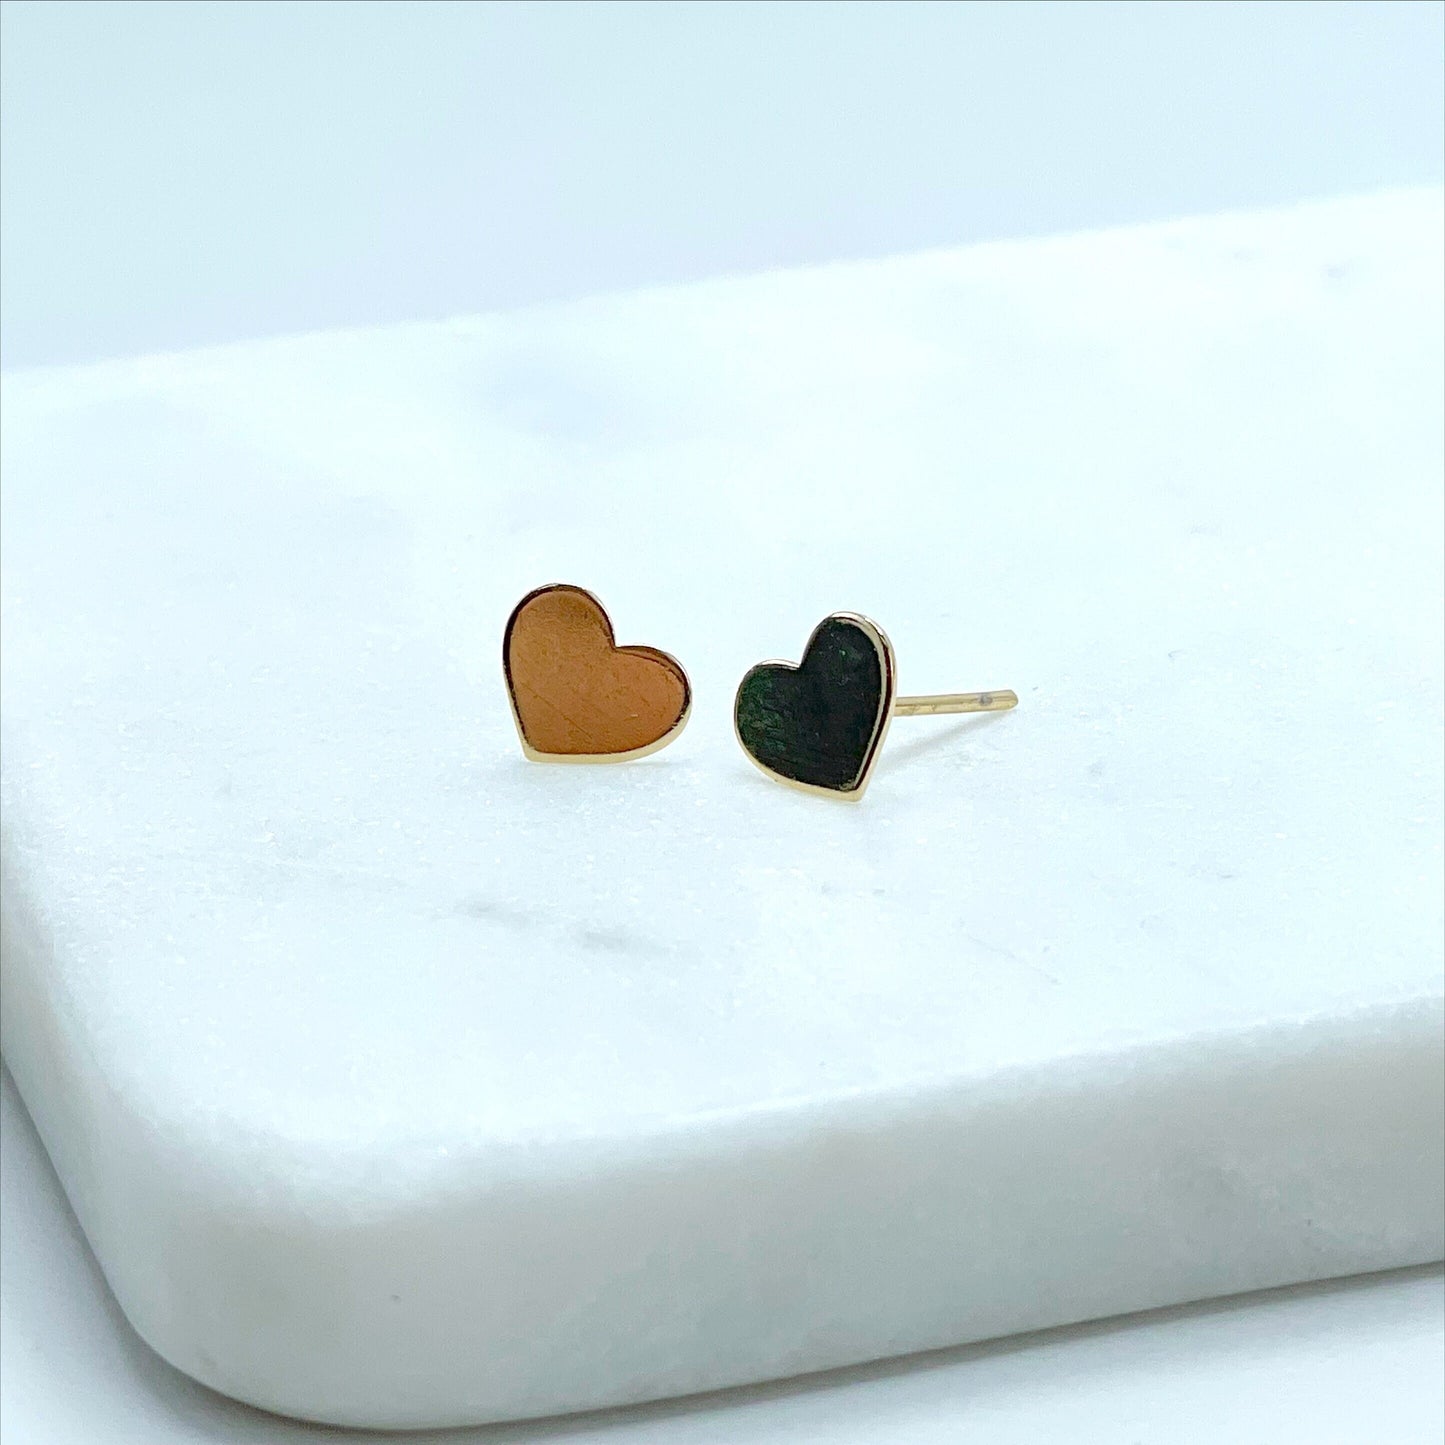 18k Gold Filled 8mm Heart Stud Earrings, Wholesale Jewelry Making Supplies